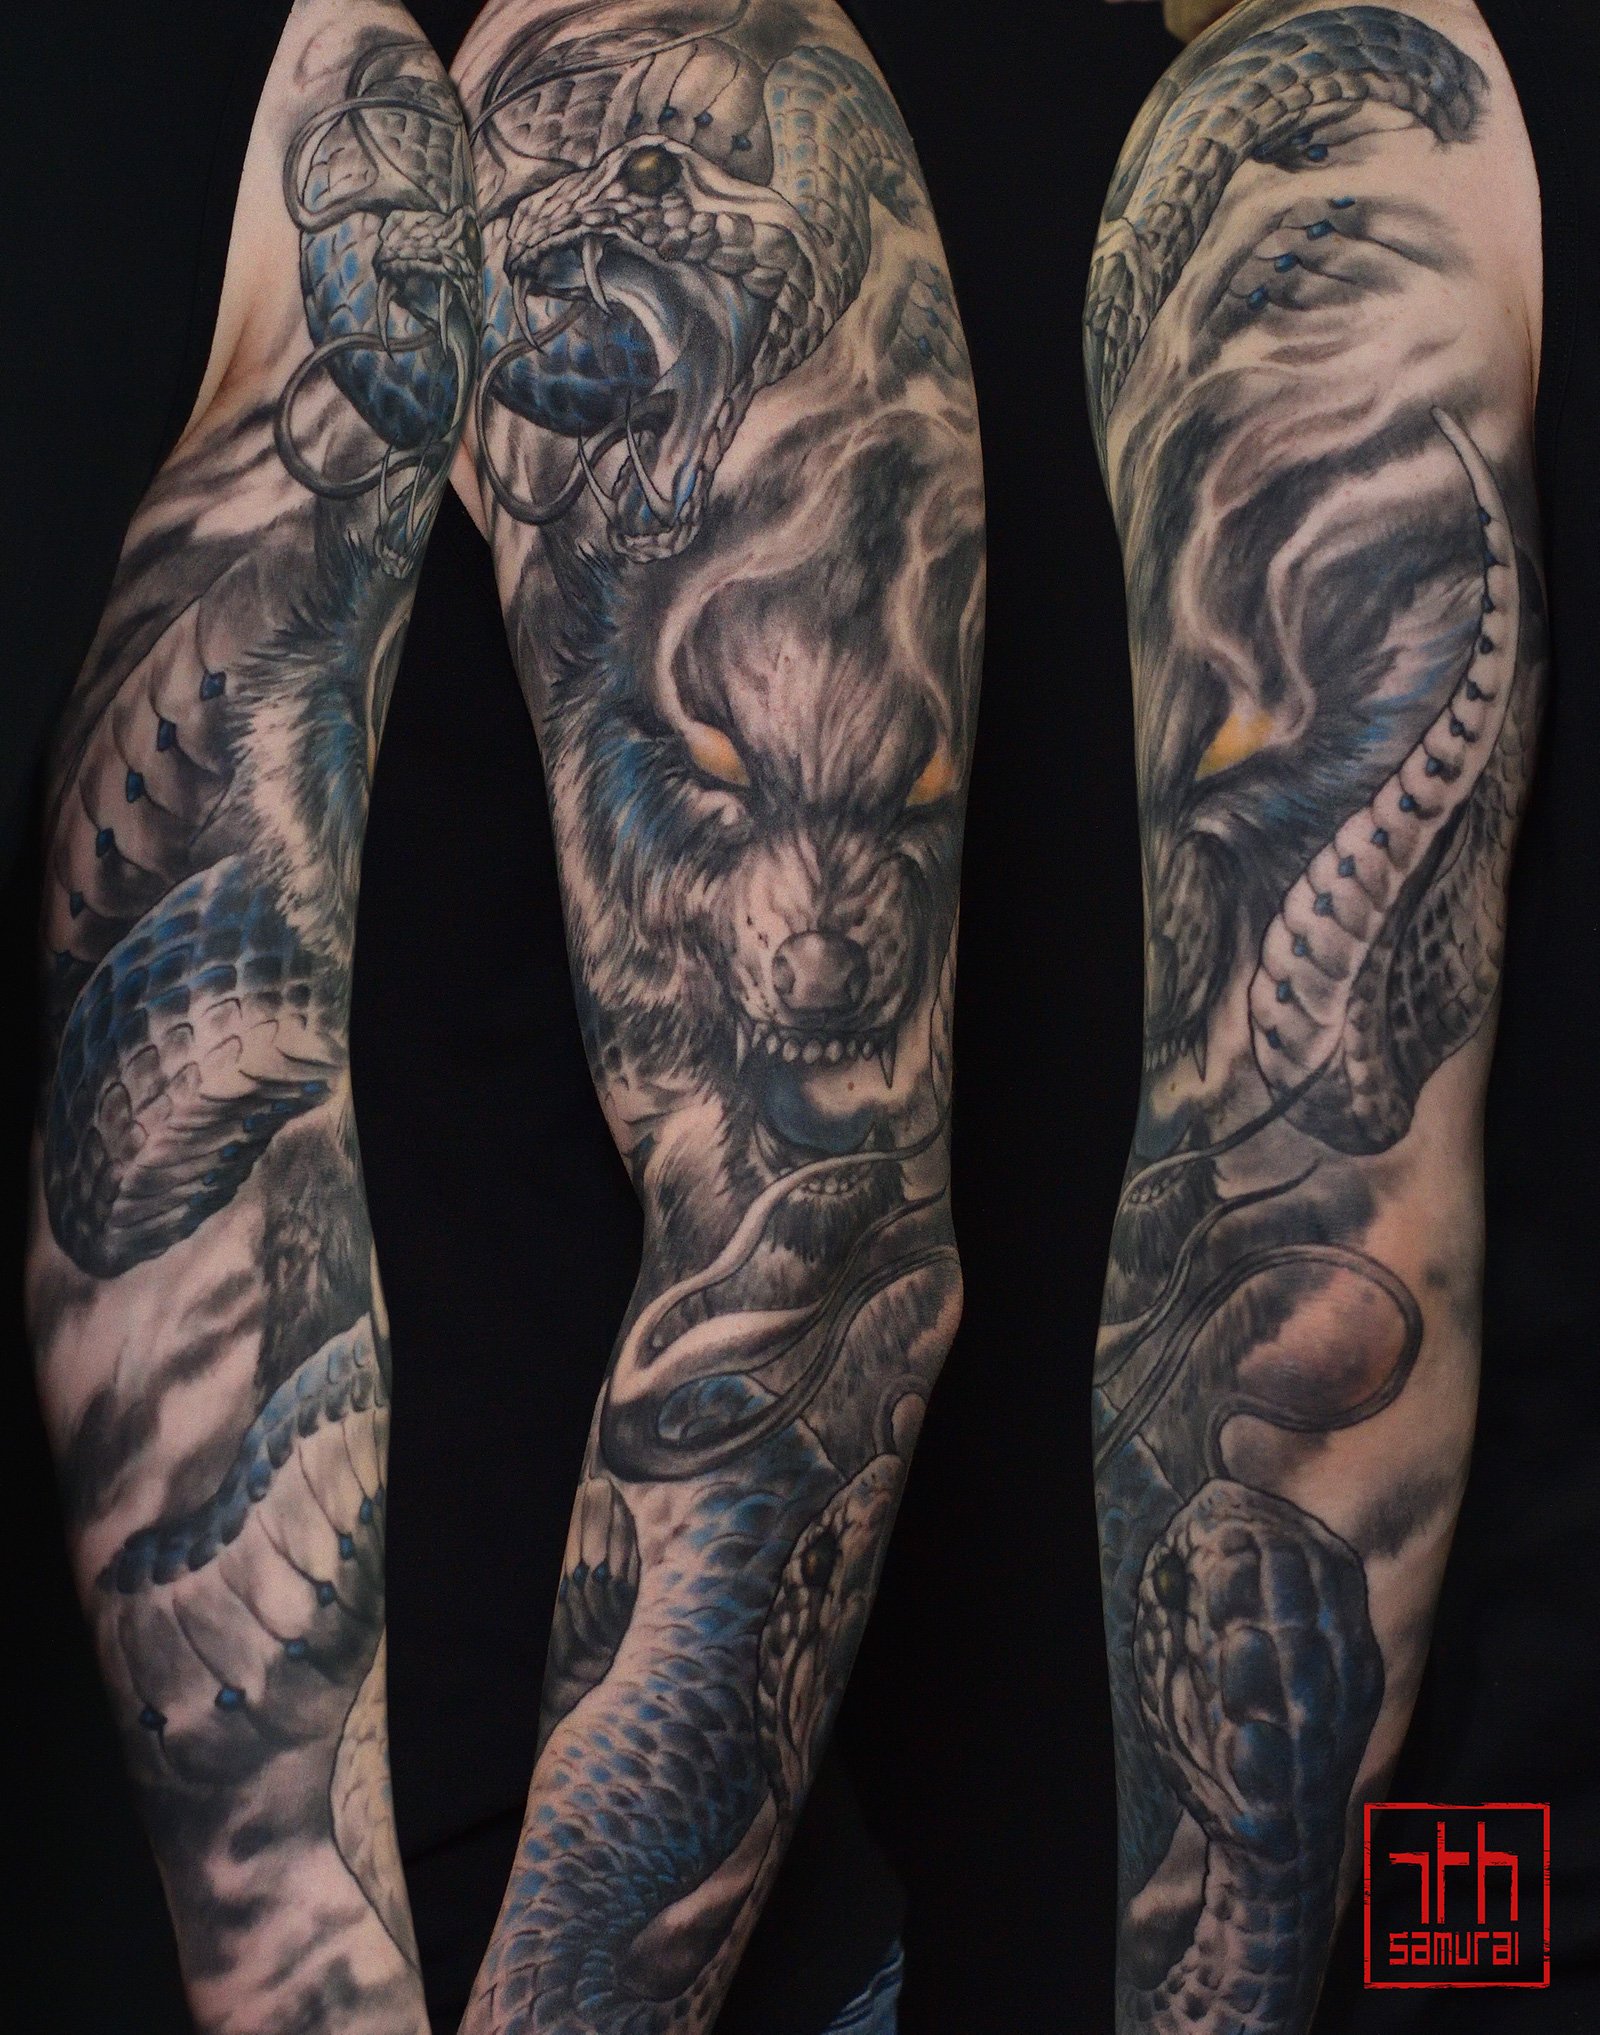 asian tattoo artist at convention show 2022 snake wolf smoke tattoo animal sleeve mens kai 7th samurai 2021 edmonton blue and yellow highlights